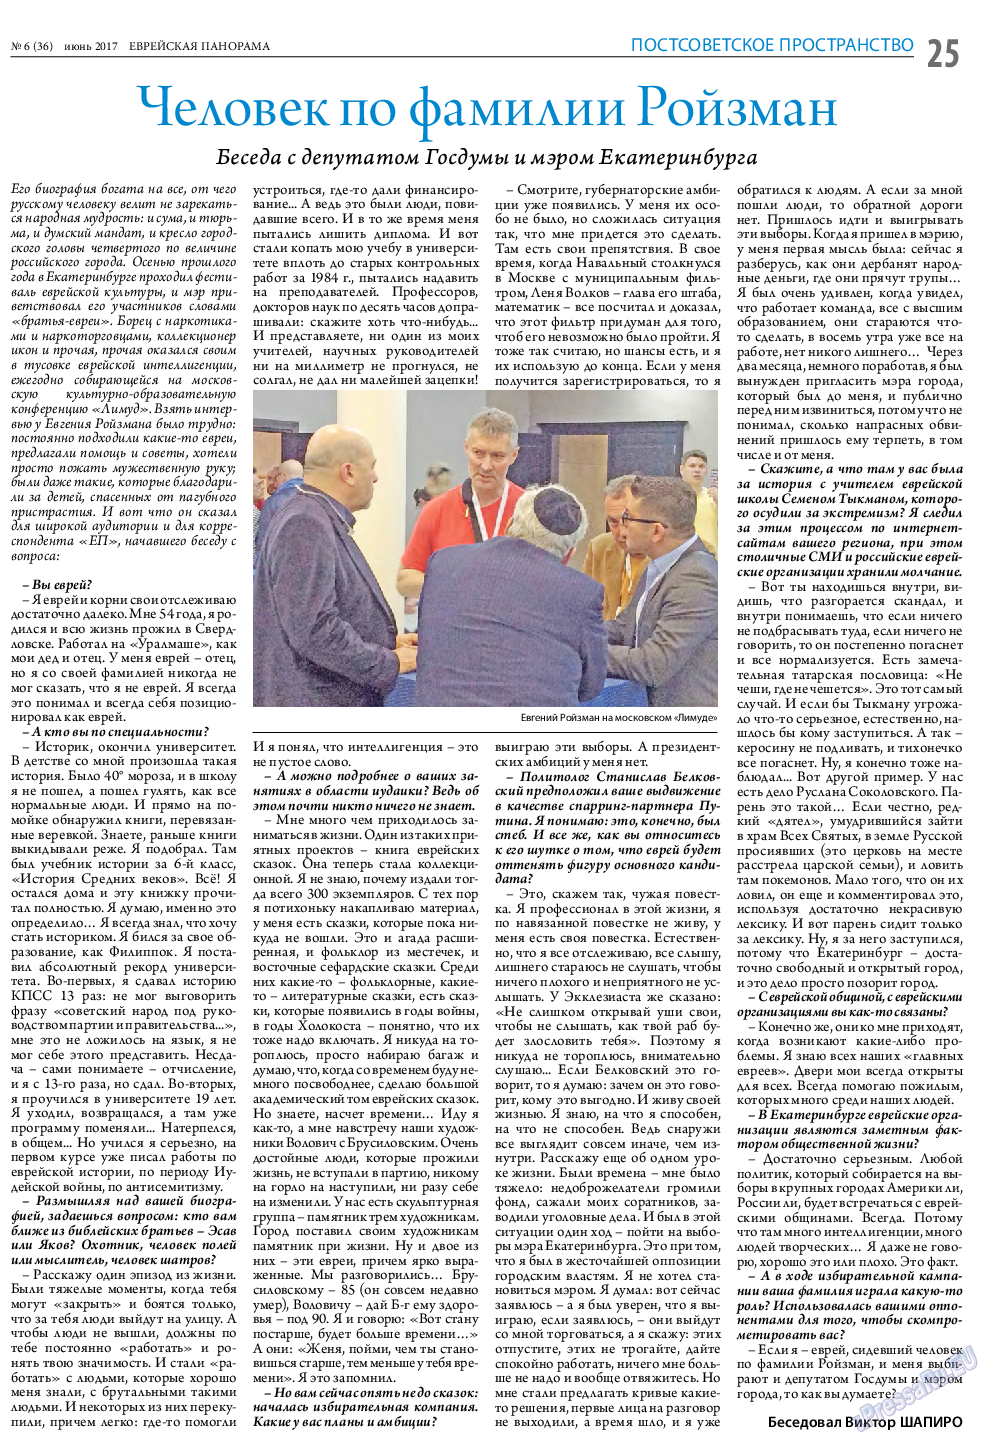 Еврейская панорама, газета. 2017 №6 стр.25